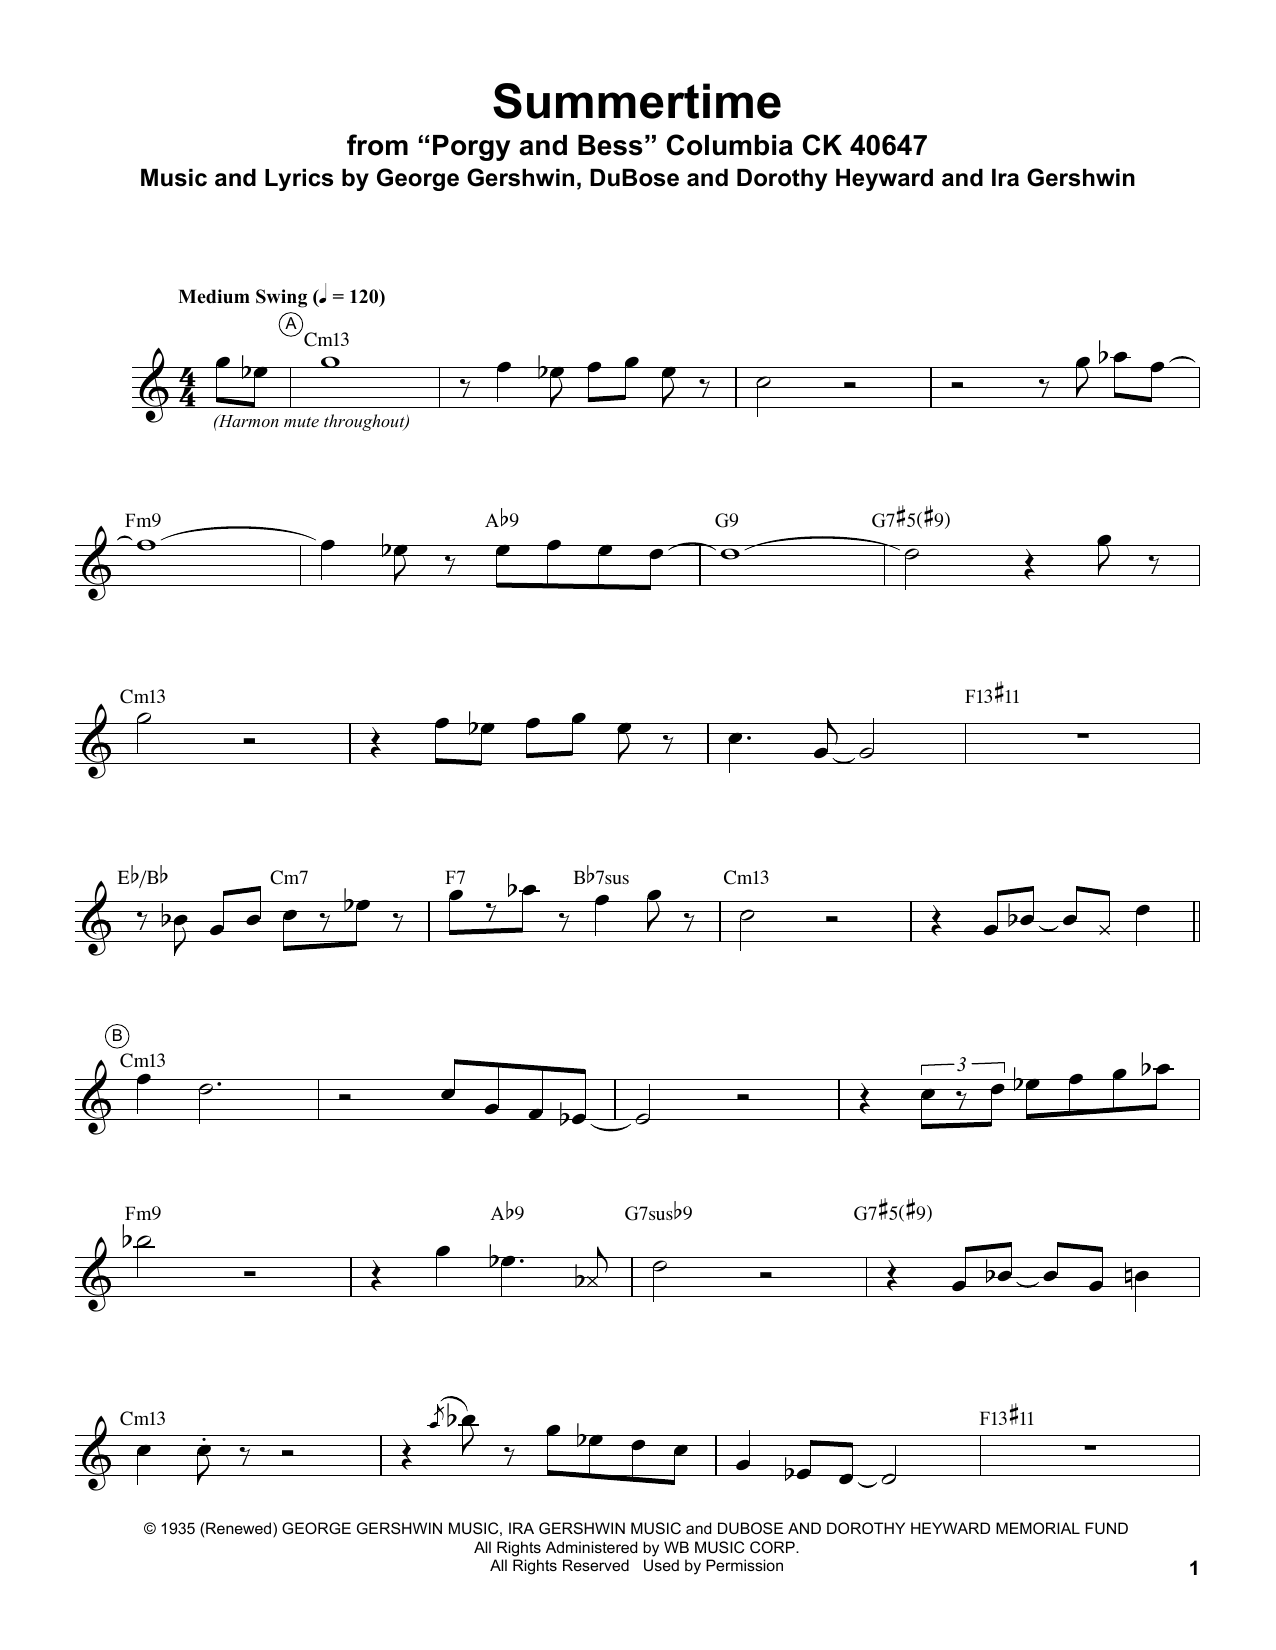 Miles Davis Summertime Sheet Music Notes & Chords for Trumpet Transcription - Download or Print PDF